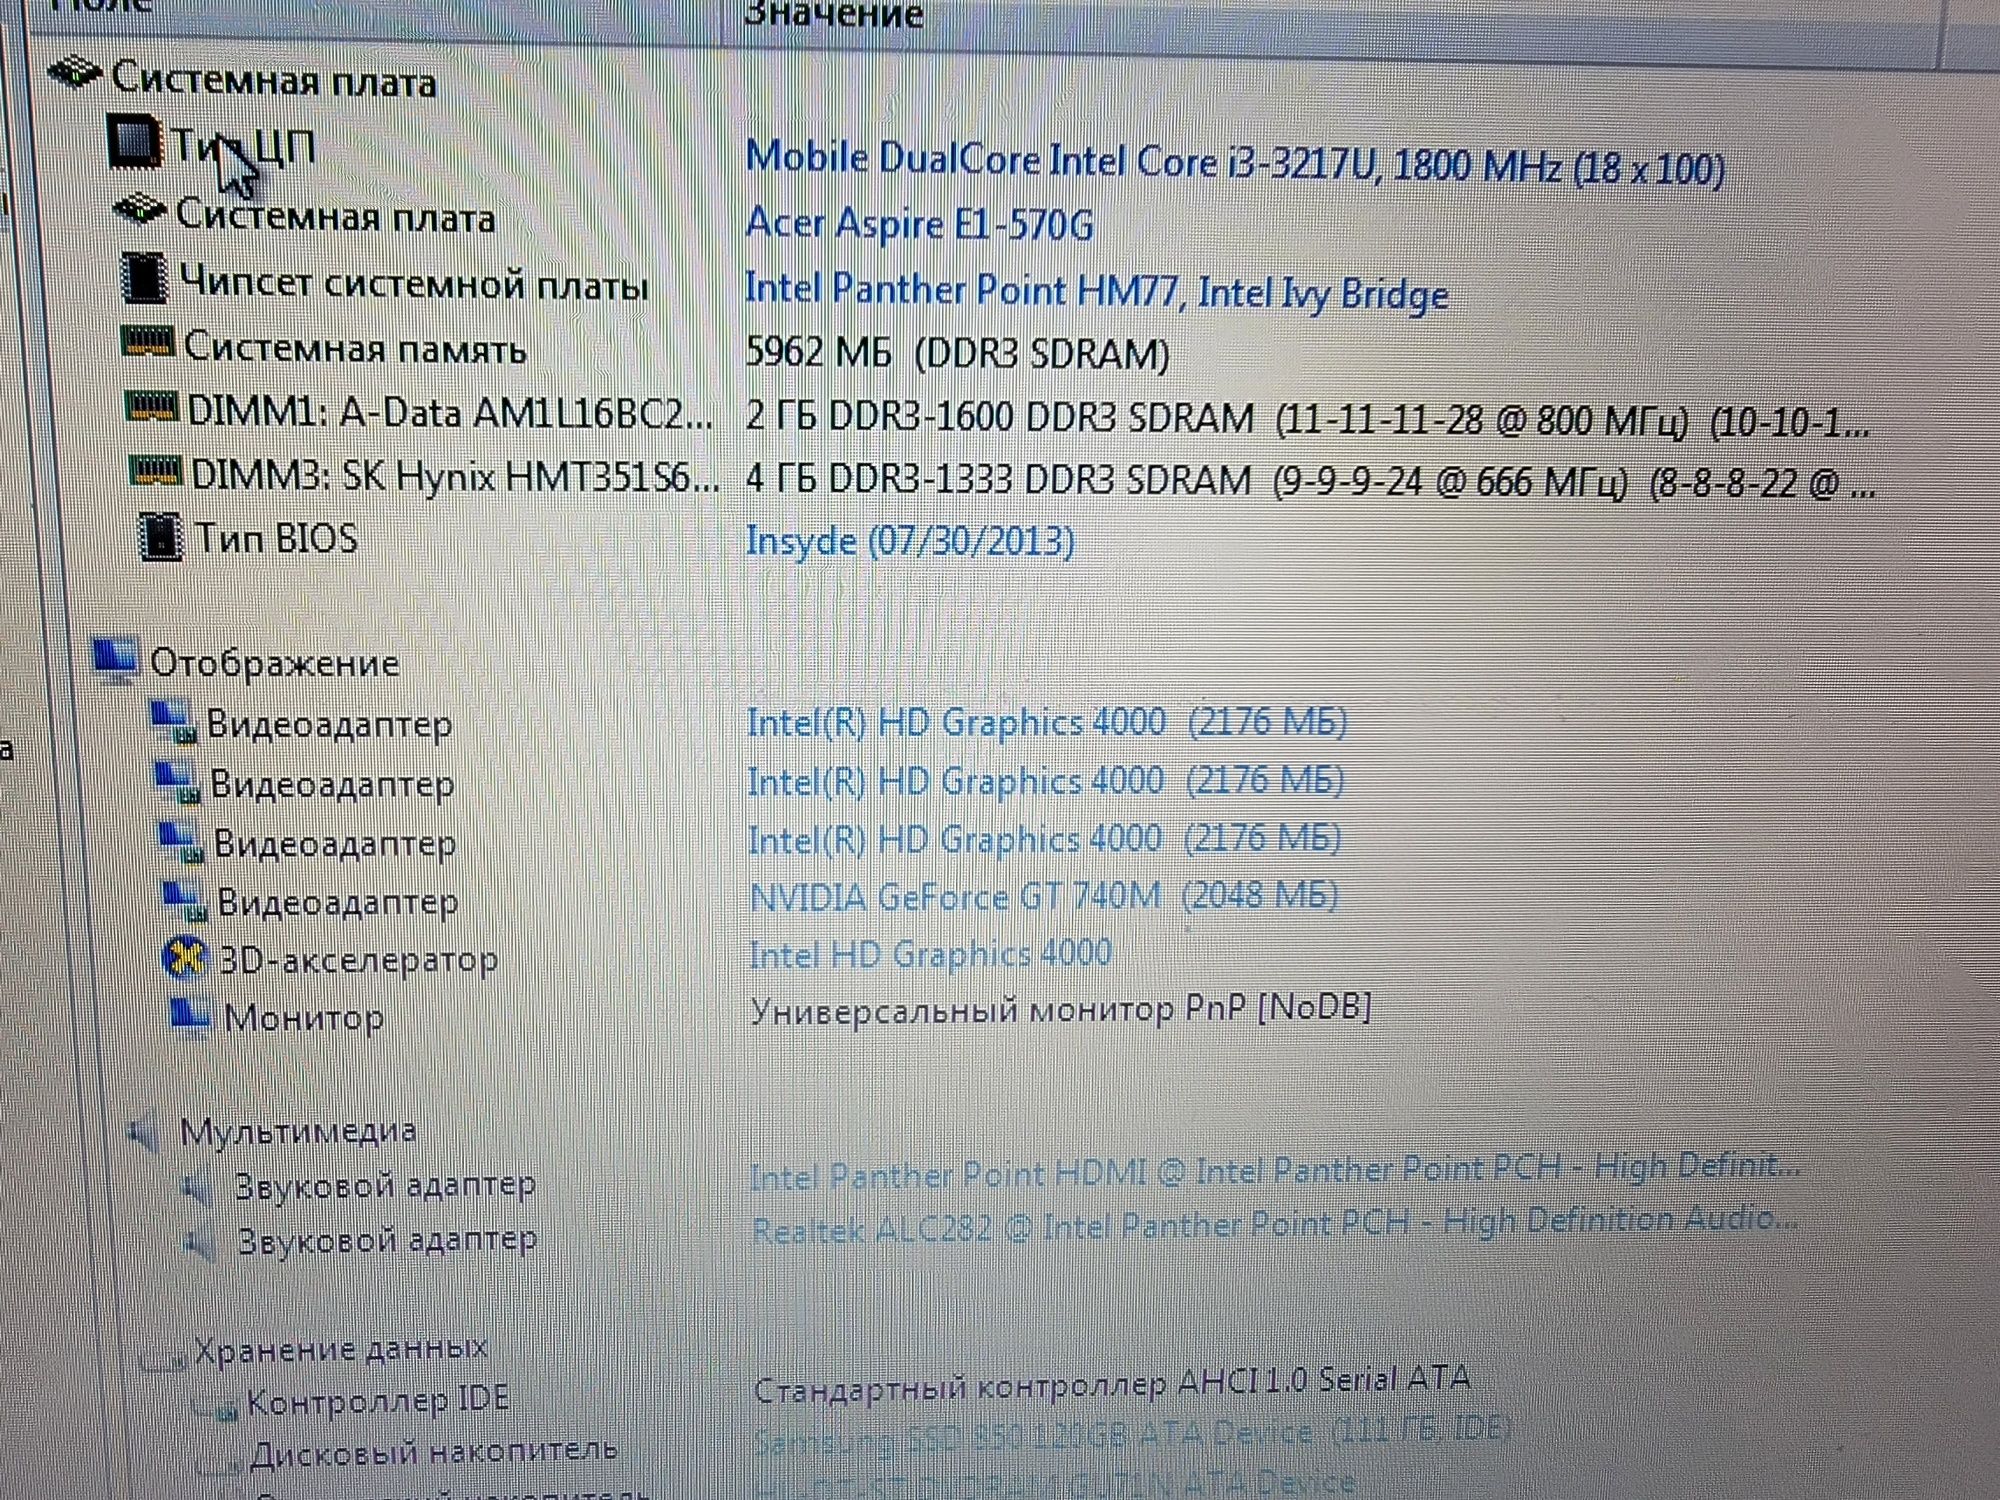 Acer Aspire e1- 570g 15.6 core i3 3217 GeForce 740m ssd